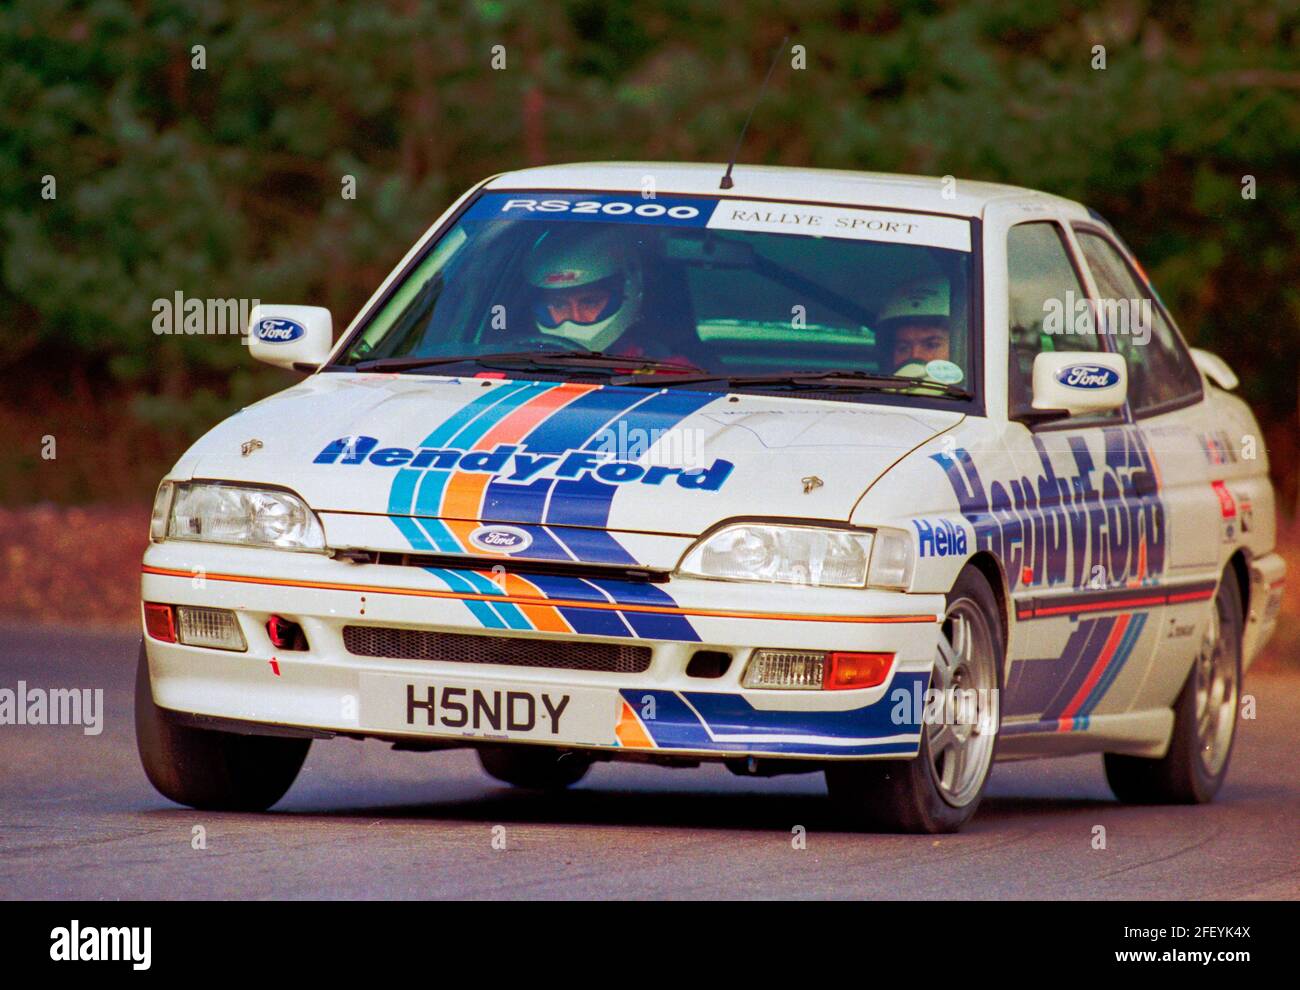 Hendy Ford sponsored Escort mk5 rs2000 rally sport on Avon Park rally stage 1993. Stock Photo